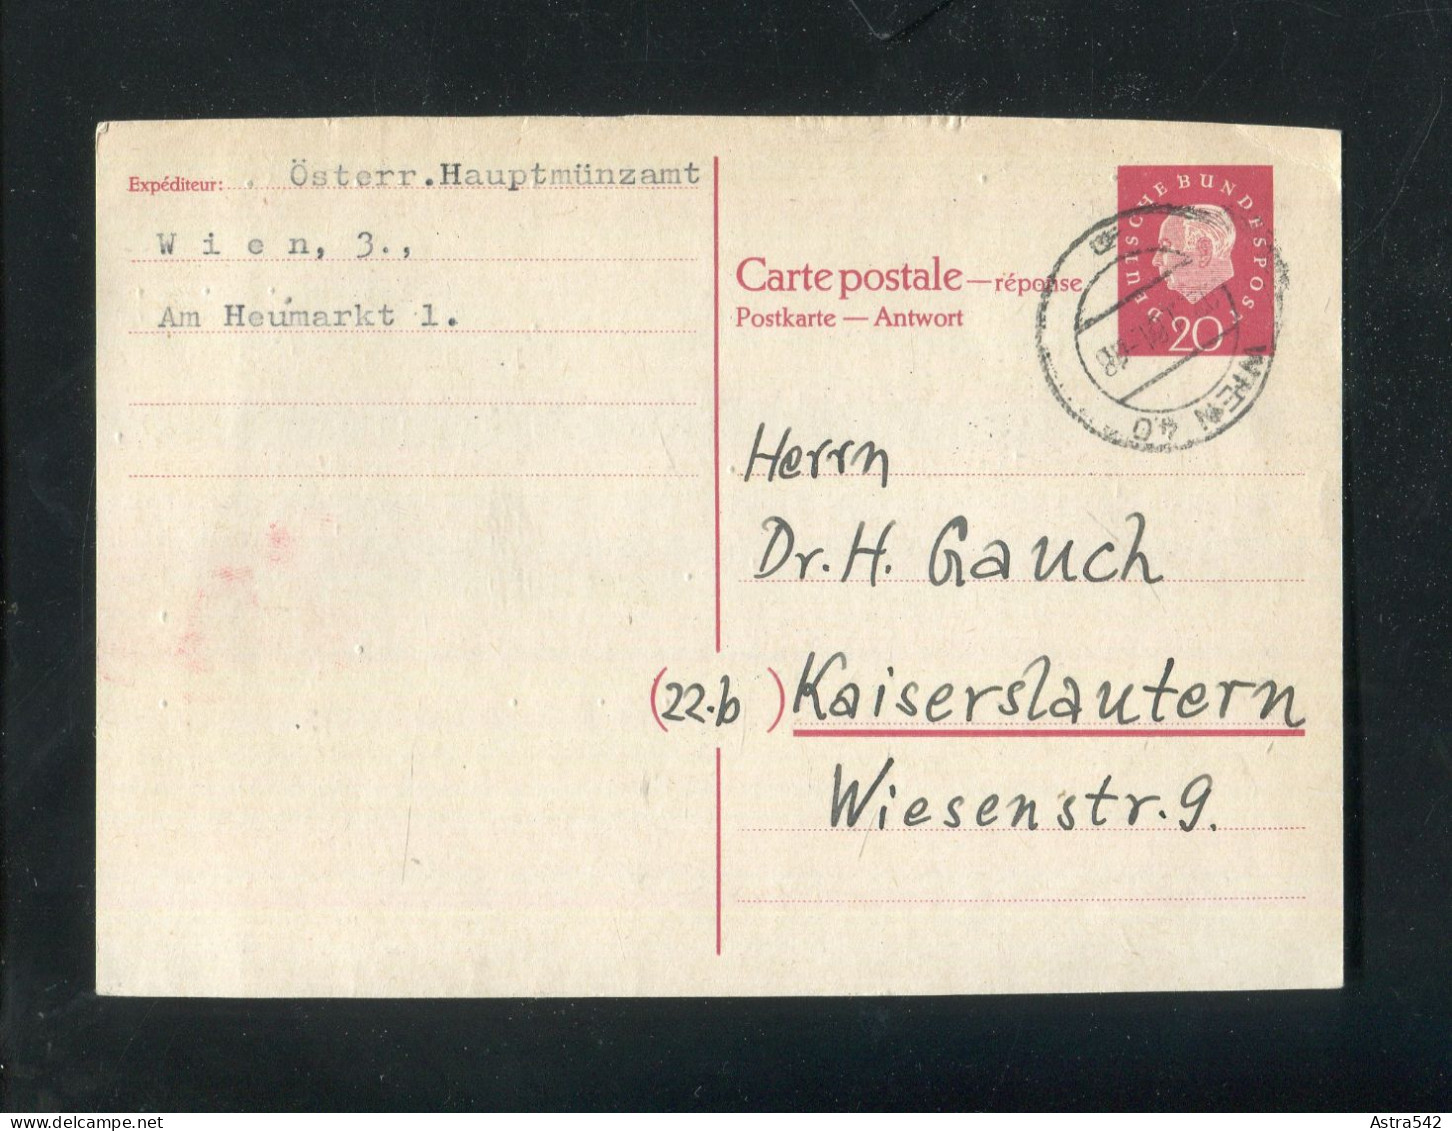 "BUNDESREPUBLIK DEUTSCHLAND" 1961, Postkarte (Antwortkarte) Mi. P 40A Stegstempel "WIEN" (4850) - Cartes Postales - Oblitérées